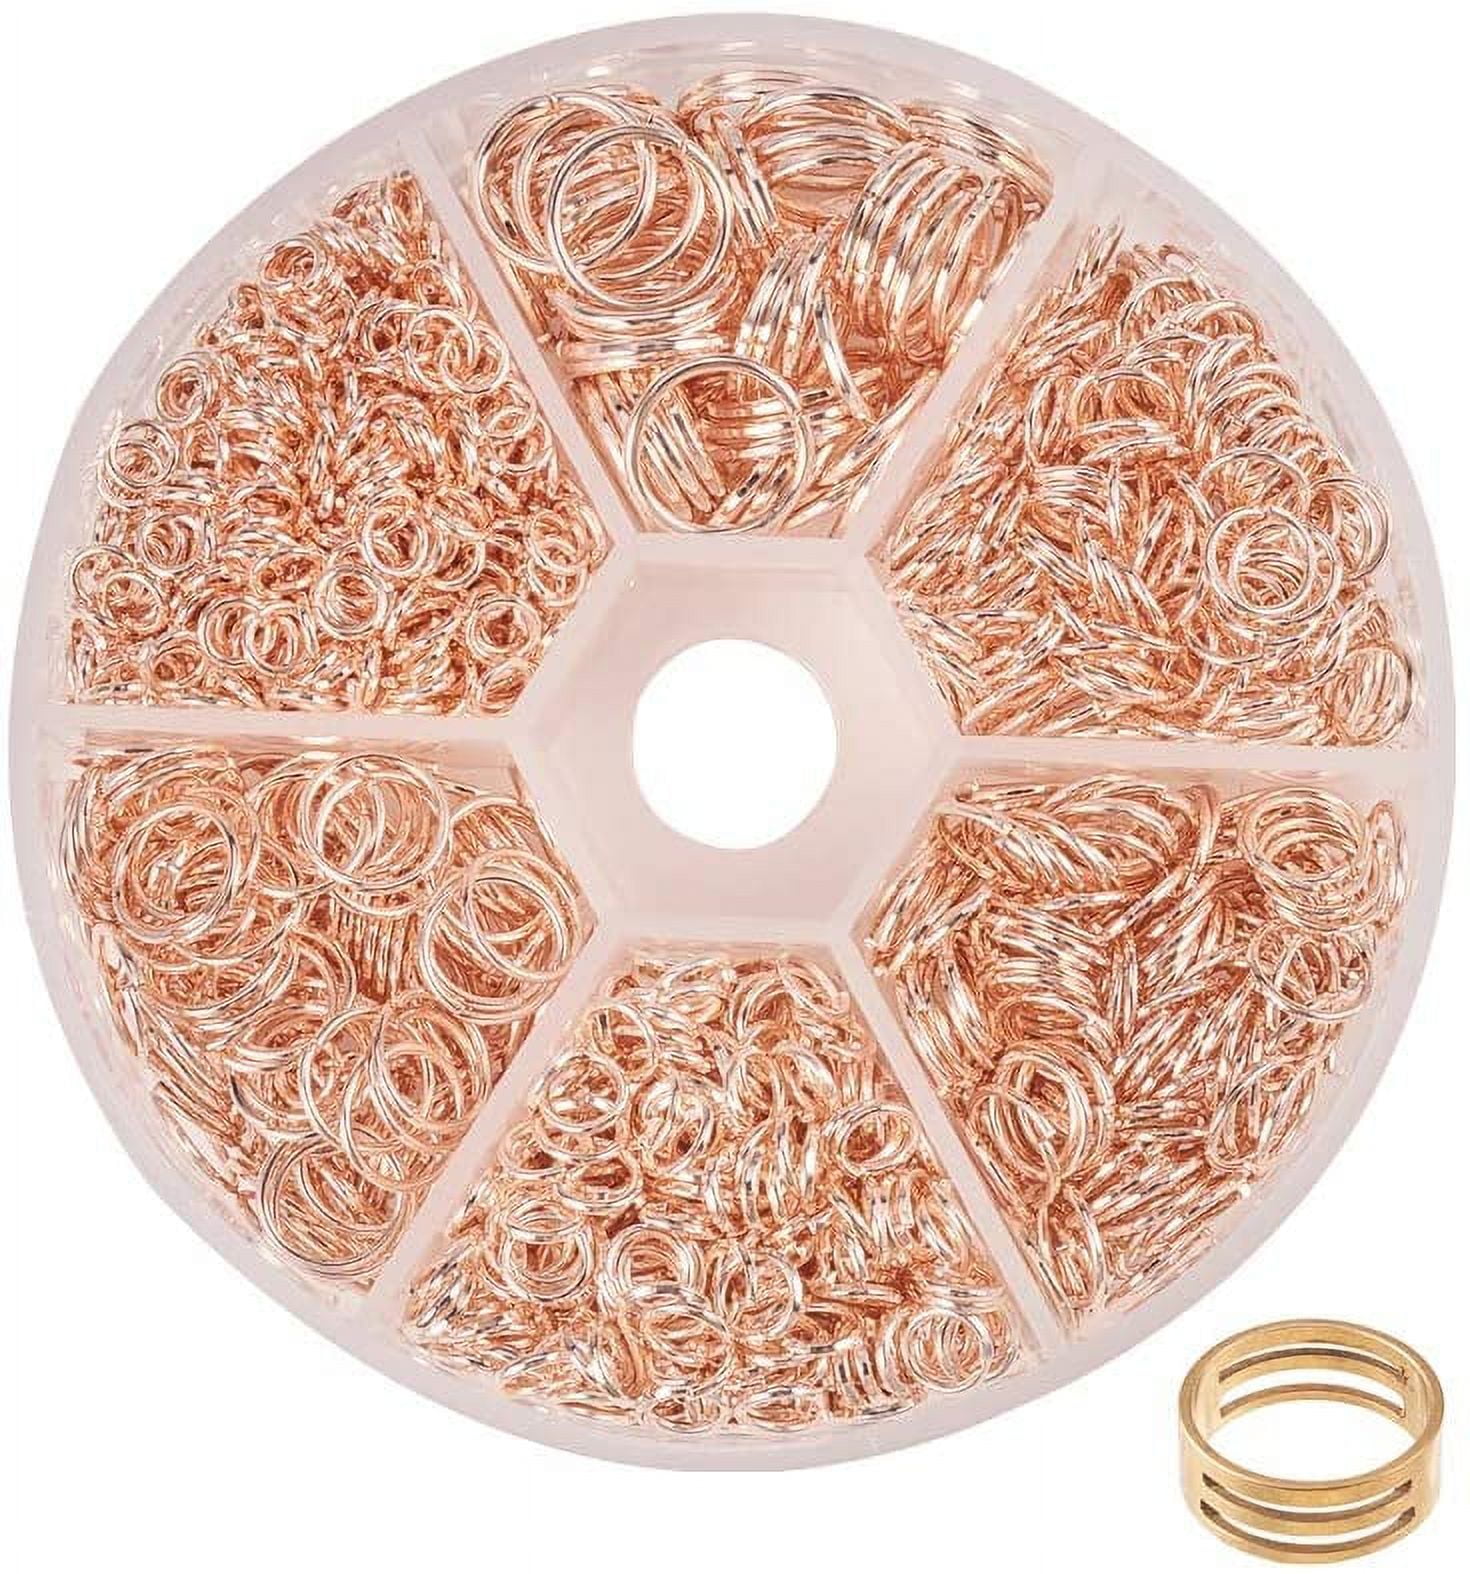 Rose Gold Filled Open Jump Rings 2x10mm 12 Gauge 10mm Inside Diameter